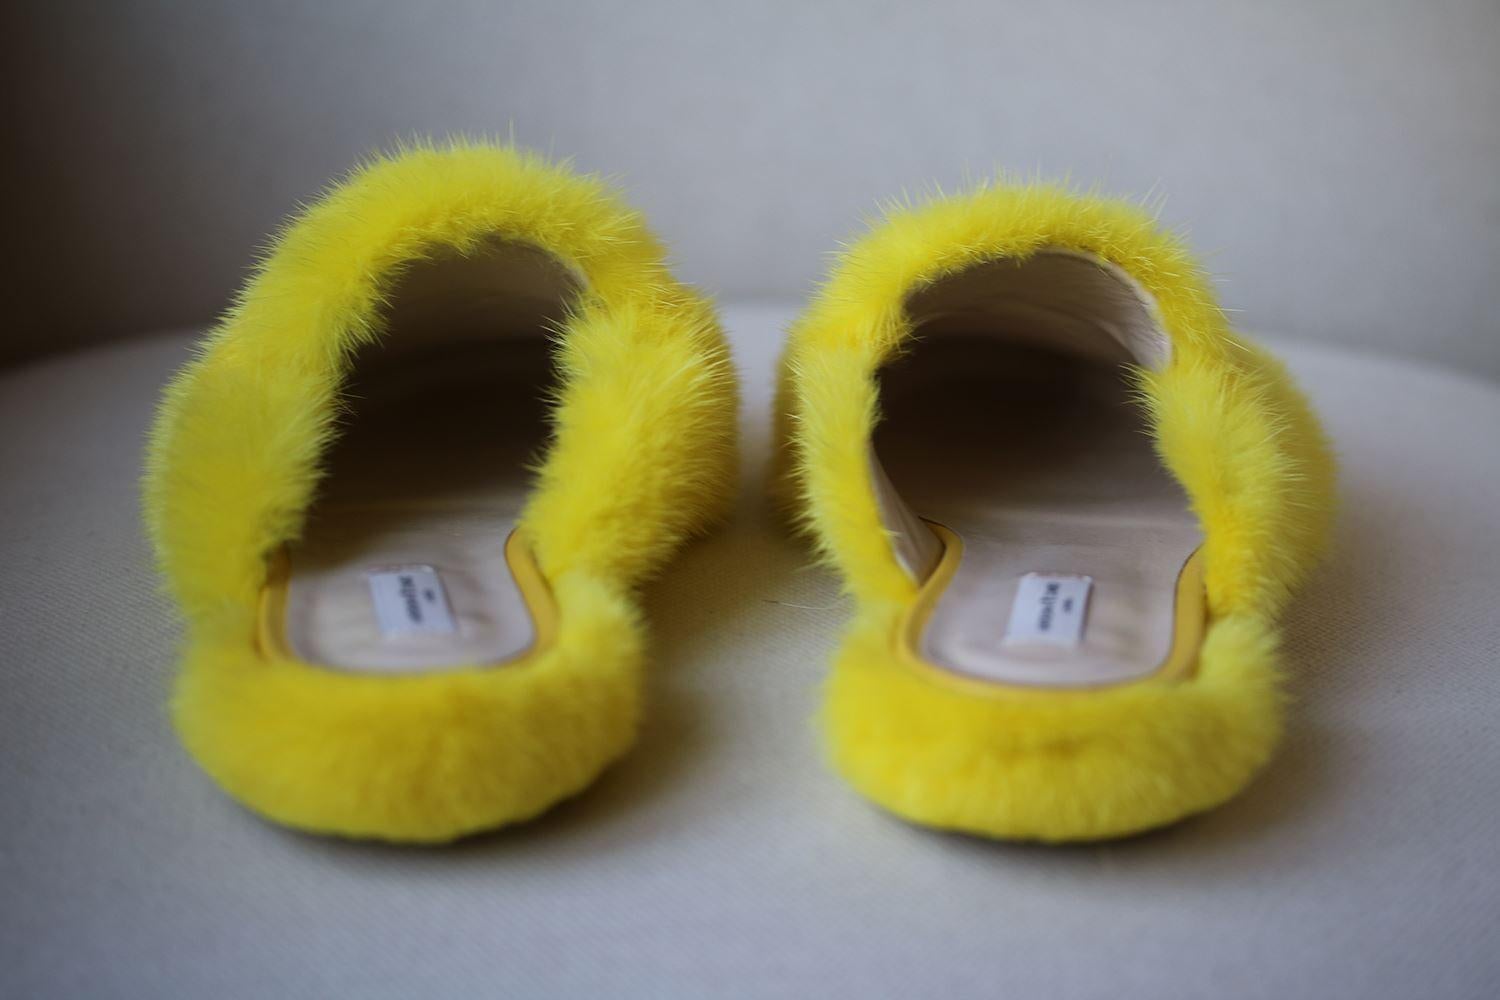 yellow fur slippers